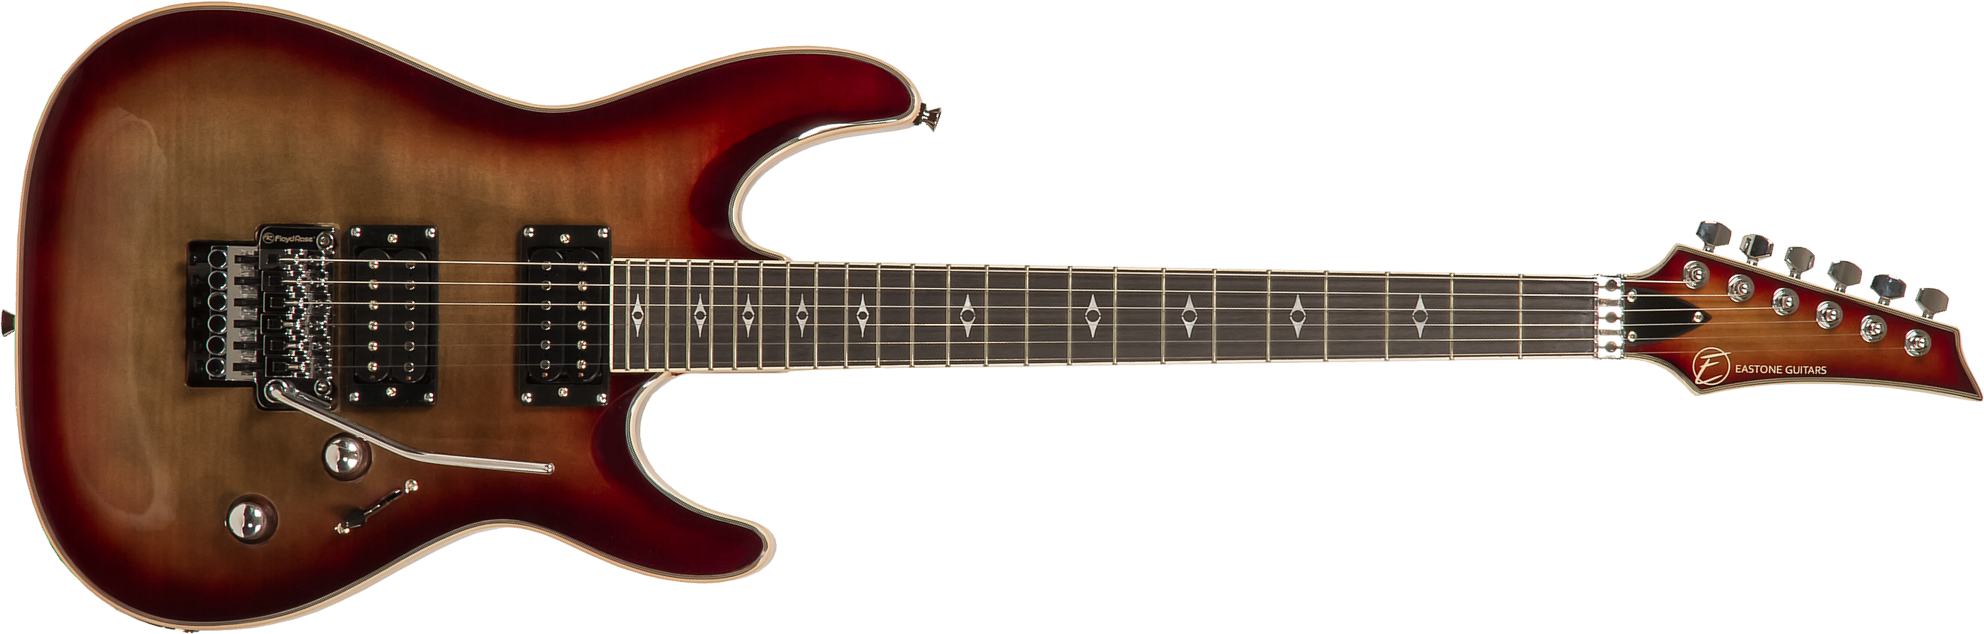 Eastone Metdc100 Hh Fr Pur - Black Flames - Elektrische gitaar in Str-vorm - Main picture